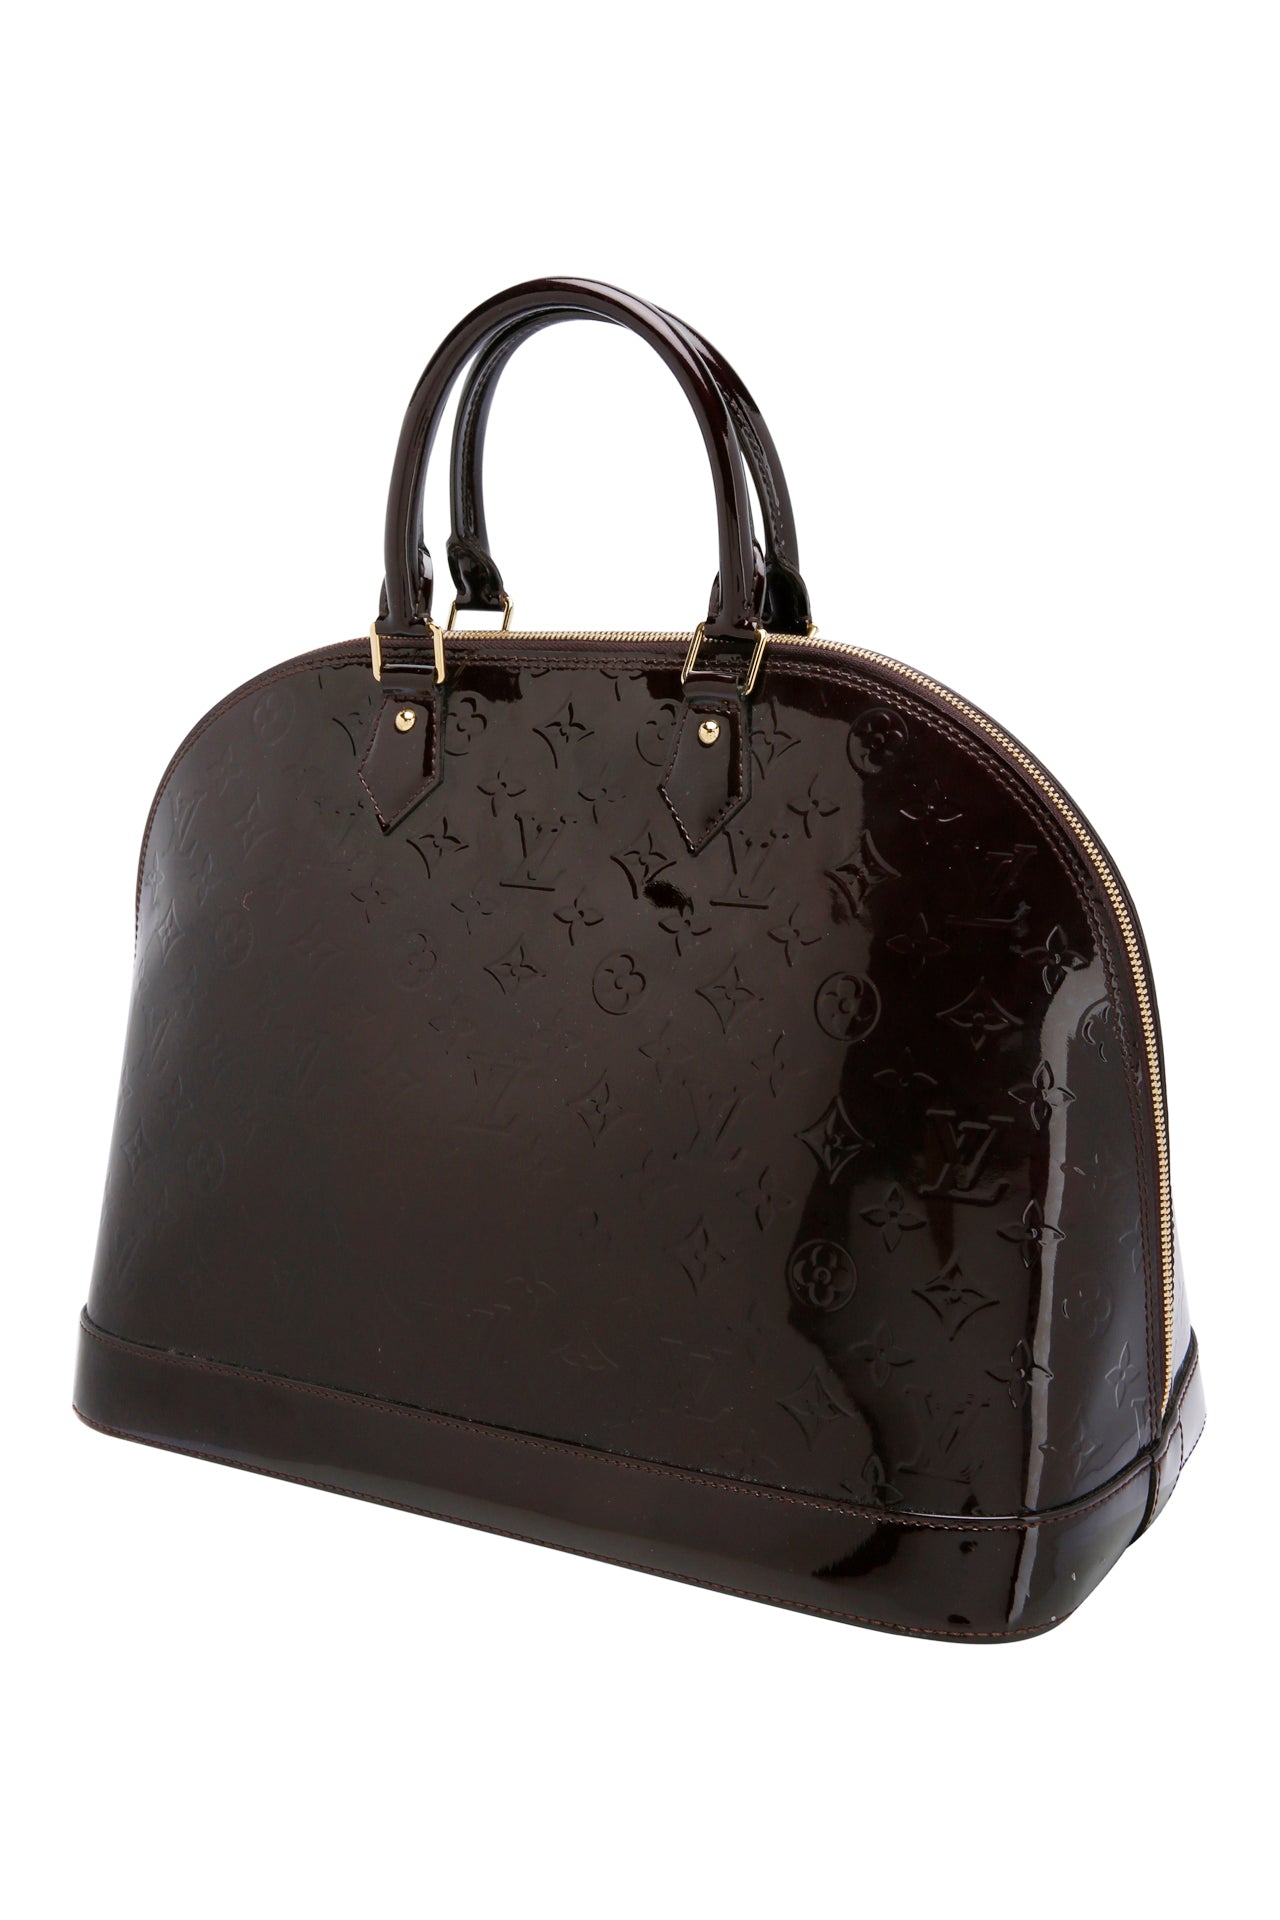 Louis Vuitton Amarante Monogram Vernis Alma GM Bag